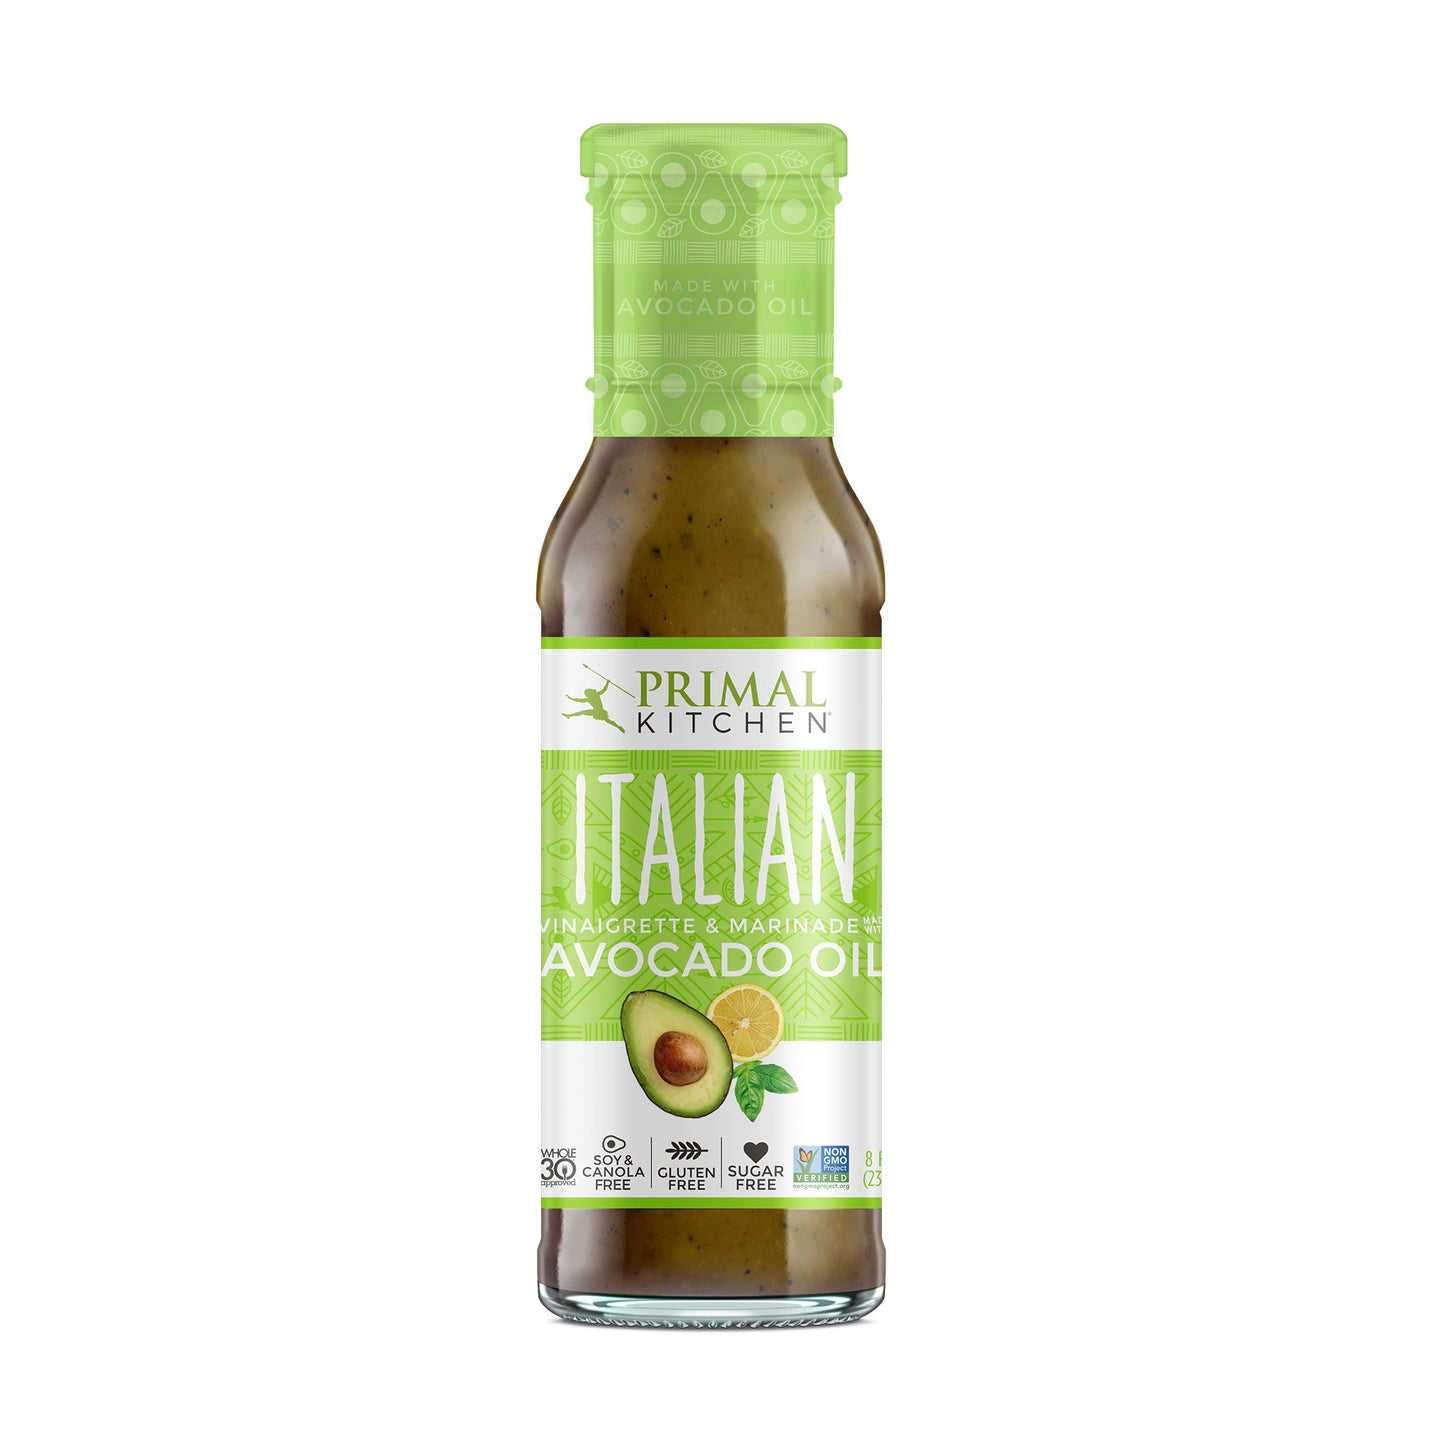 Primal Kitchen Italian Vinaigrette with Avocado Oil